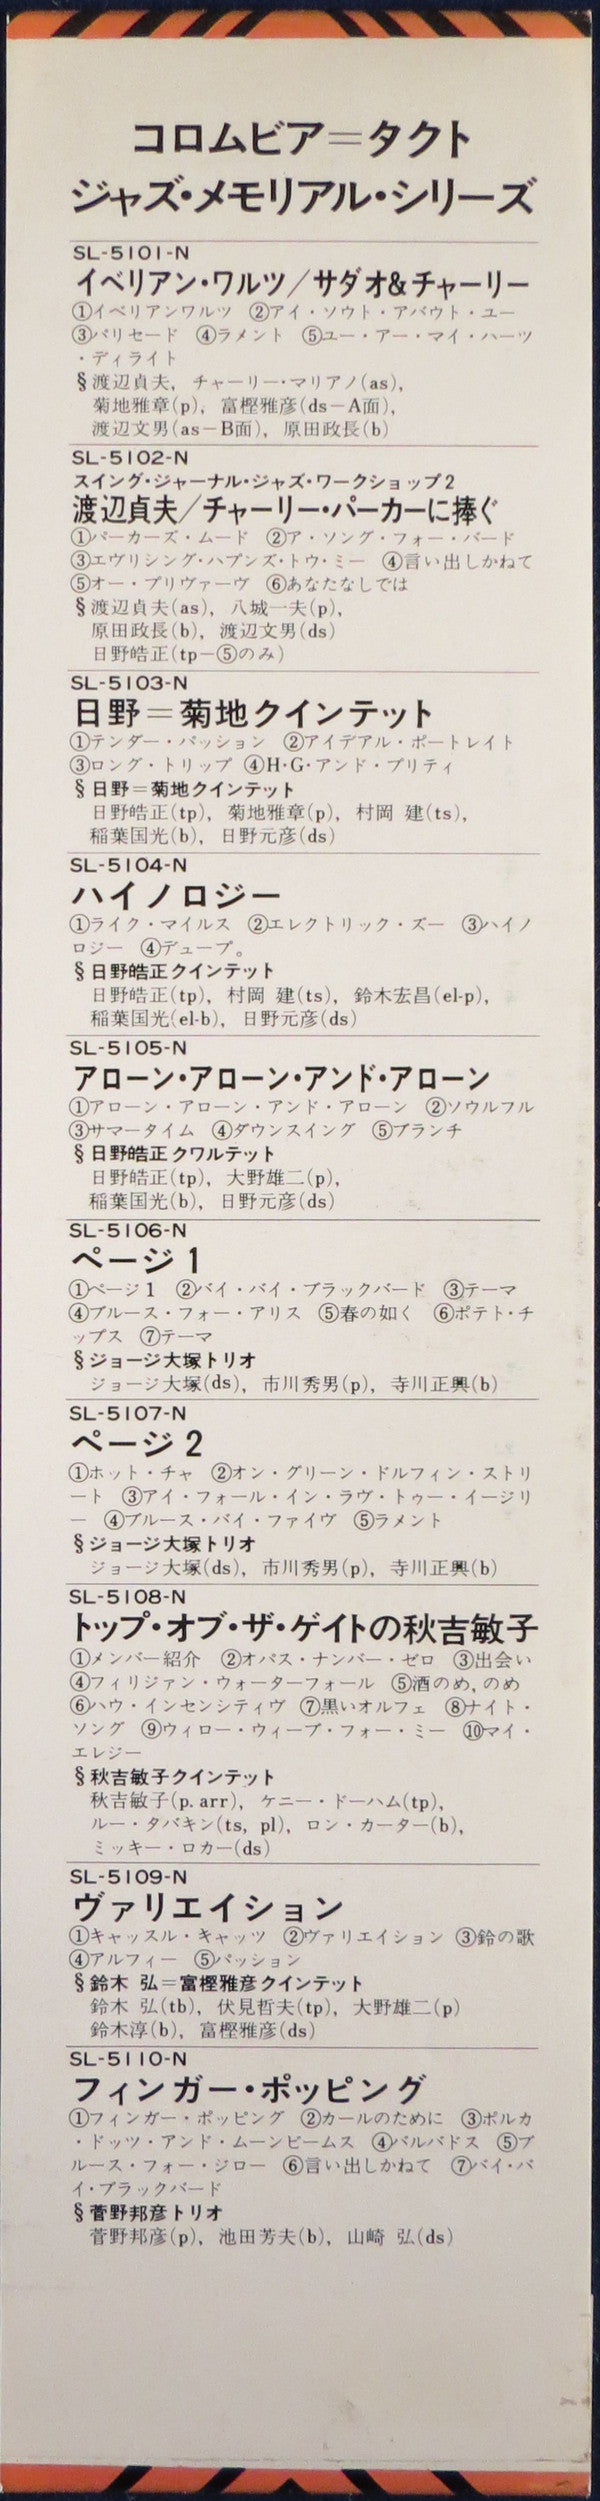 Toshiko Akiyoshi Quintet - Toshiko At Top Of The Gate (LP, Album, RE)